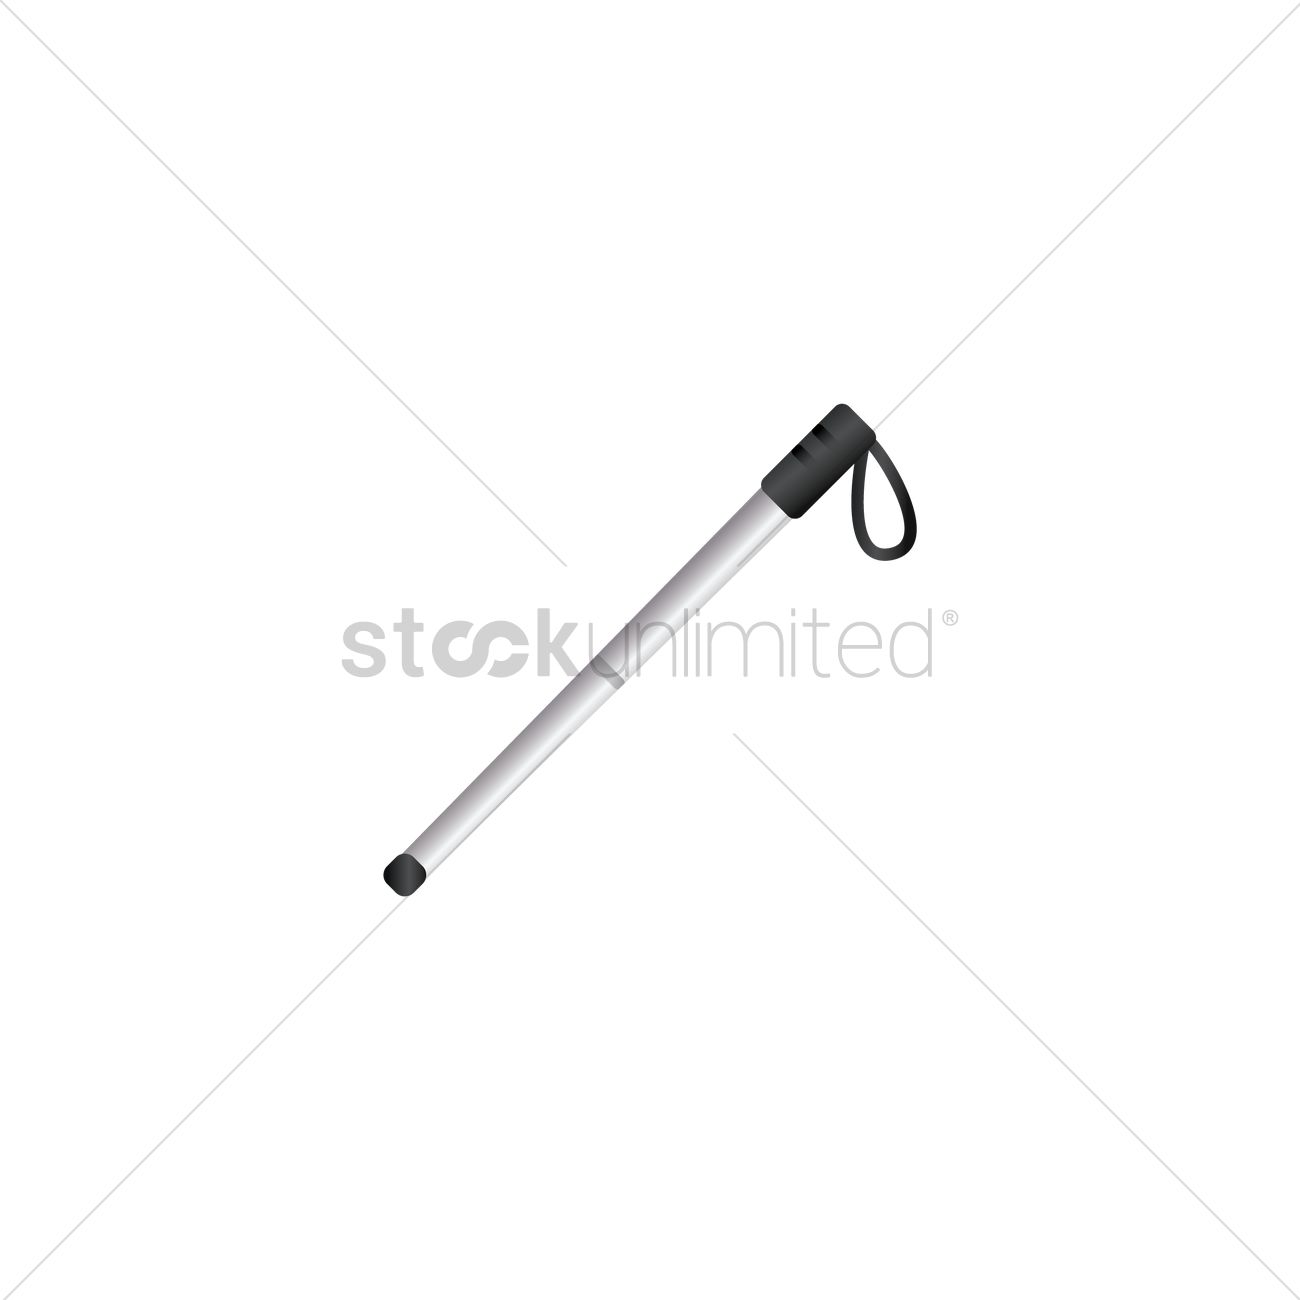 White cane icon Vector Image - 1956794 | StockUnlimited